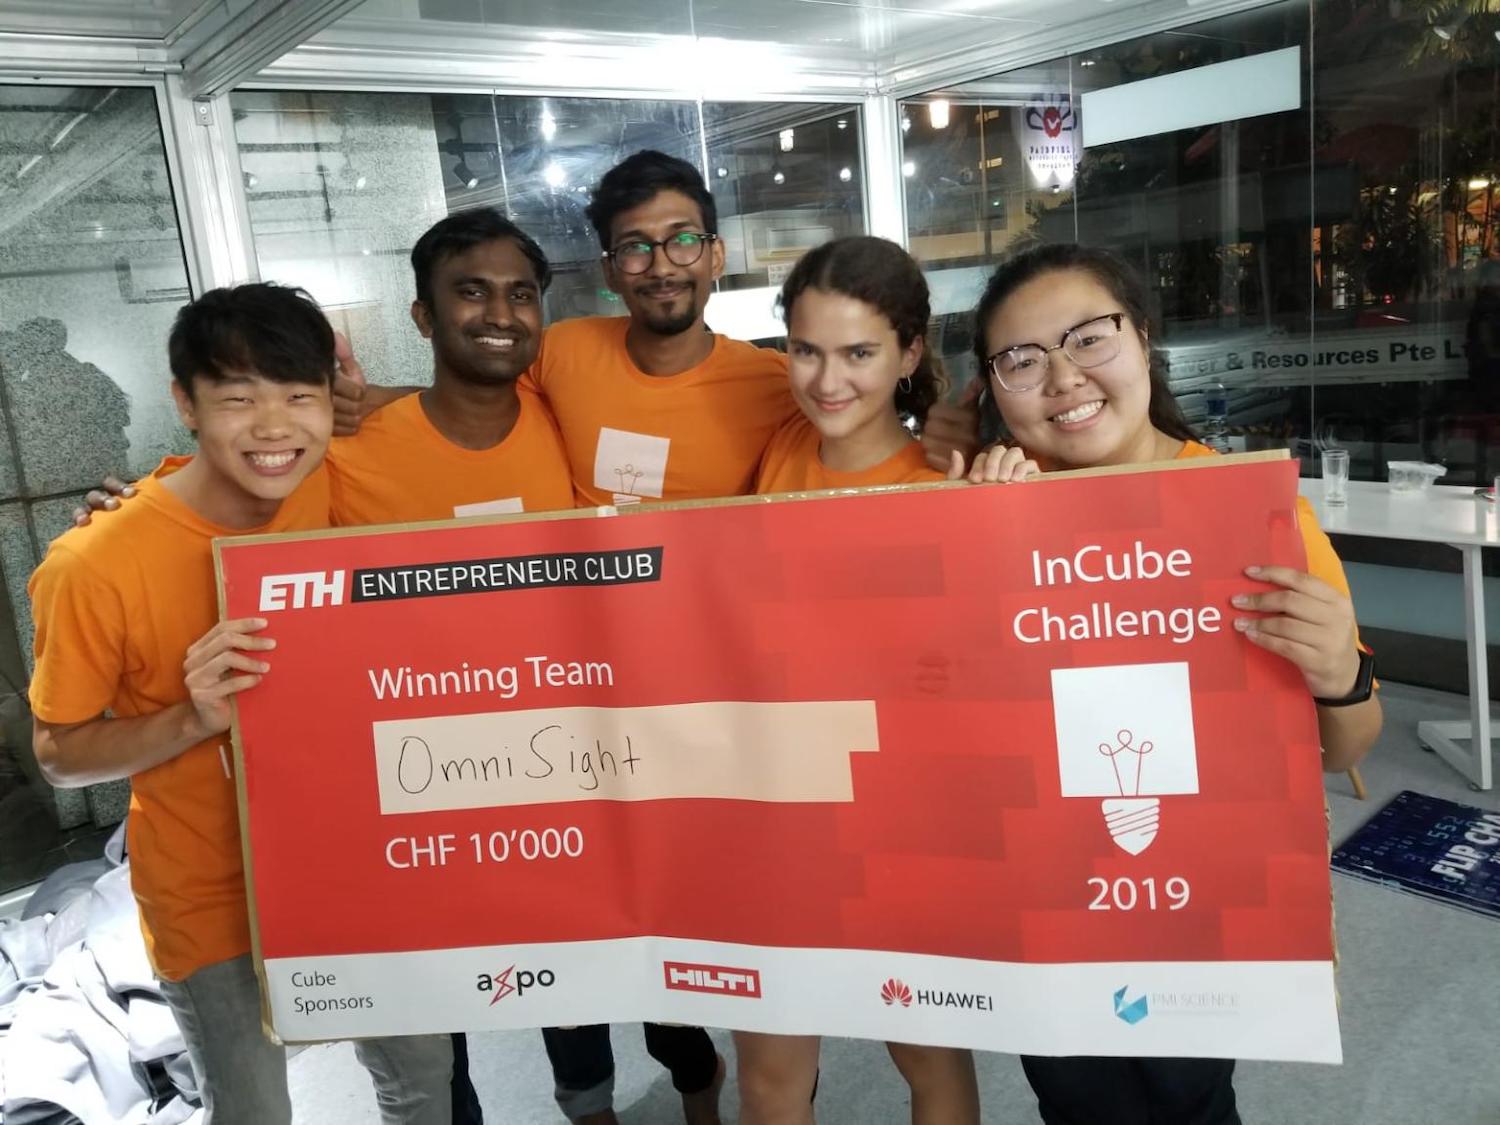 The winning team (left to right): Jonathan Ng from SUTD, Vishnu Udayagiri from NUS, Aravind Kandiah from SUTD, Victoria Faber from NUS, Jonita Chew from NUS.